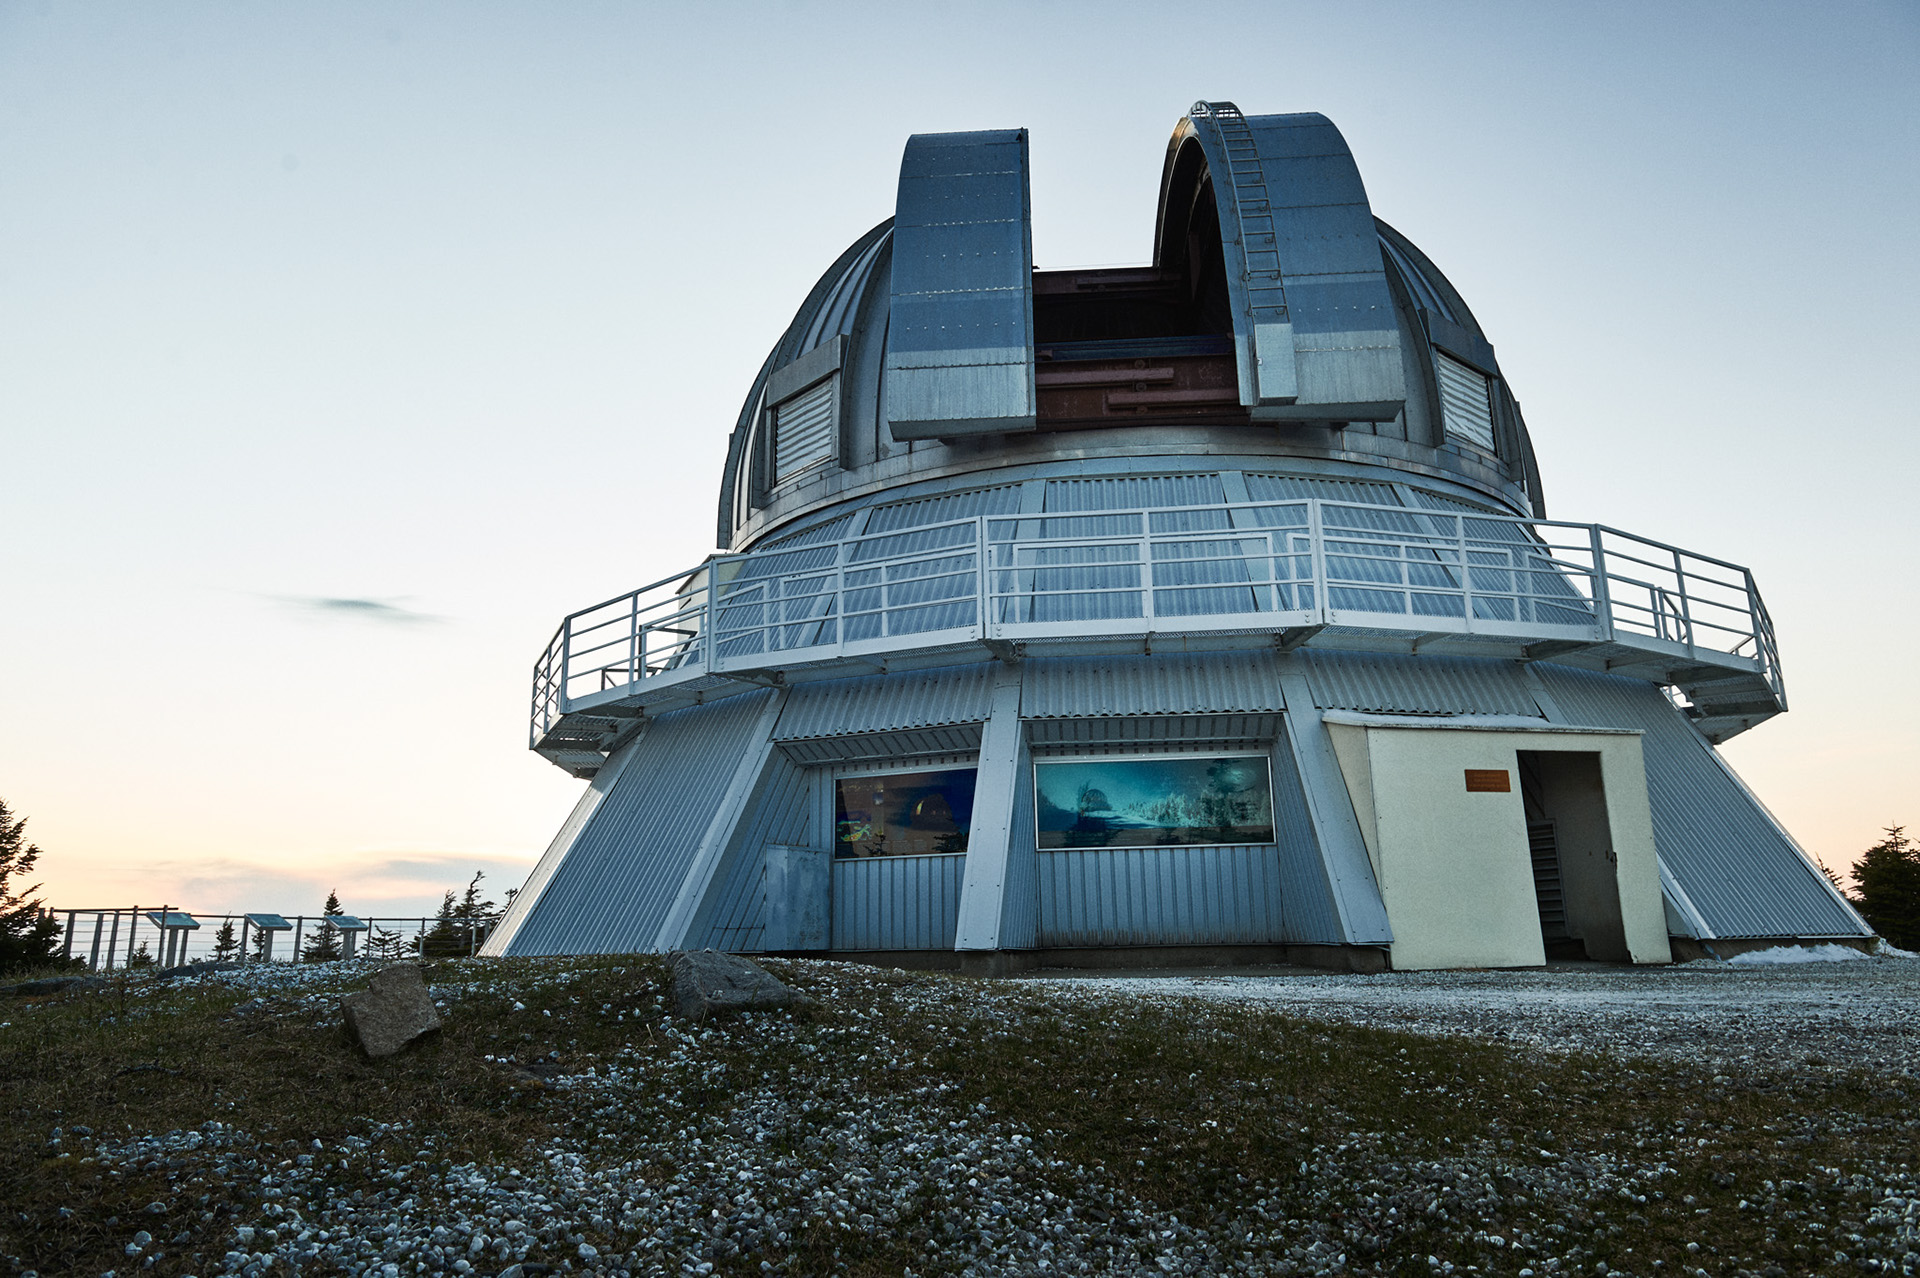 Dark Sky Reserve - The Observatory